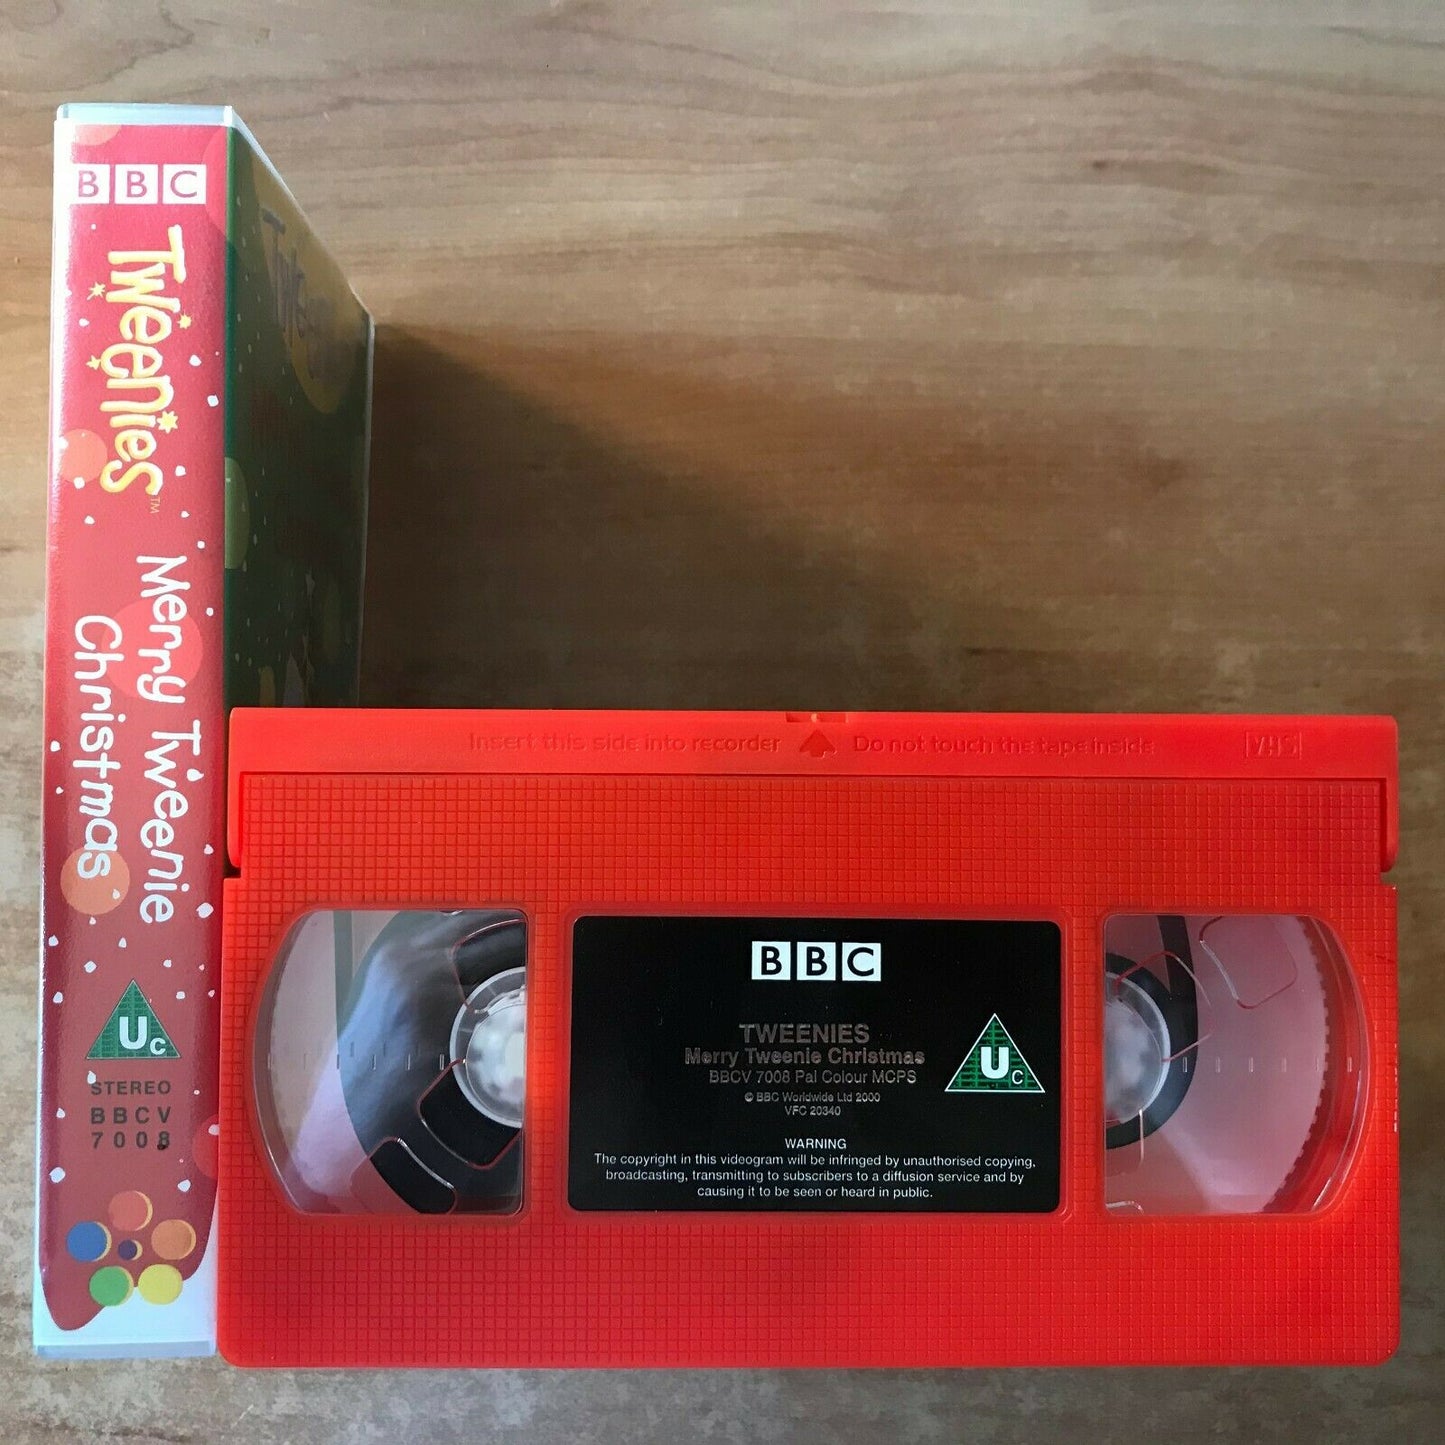 Tweenies (BBC): Merry Tweenie Christmas - Jack Frost - Santa - Children's - VHS-